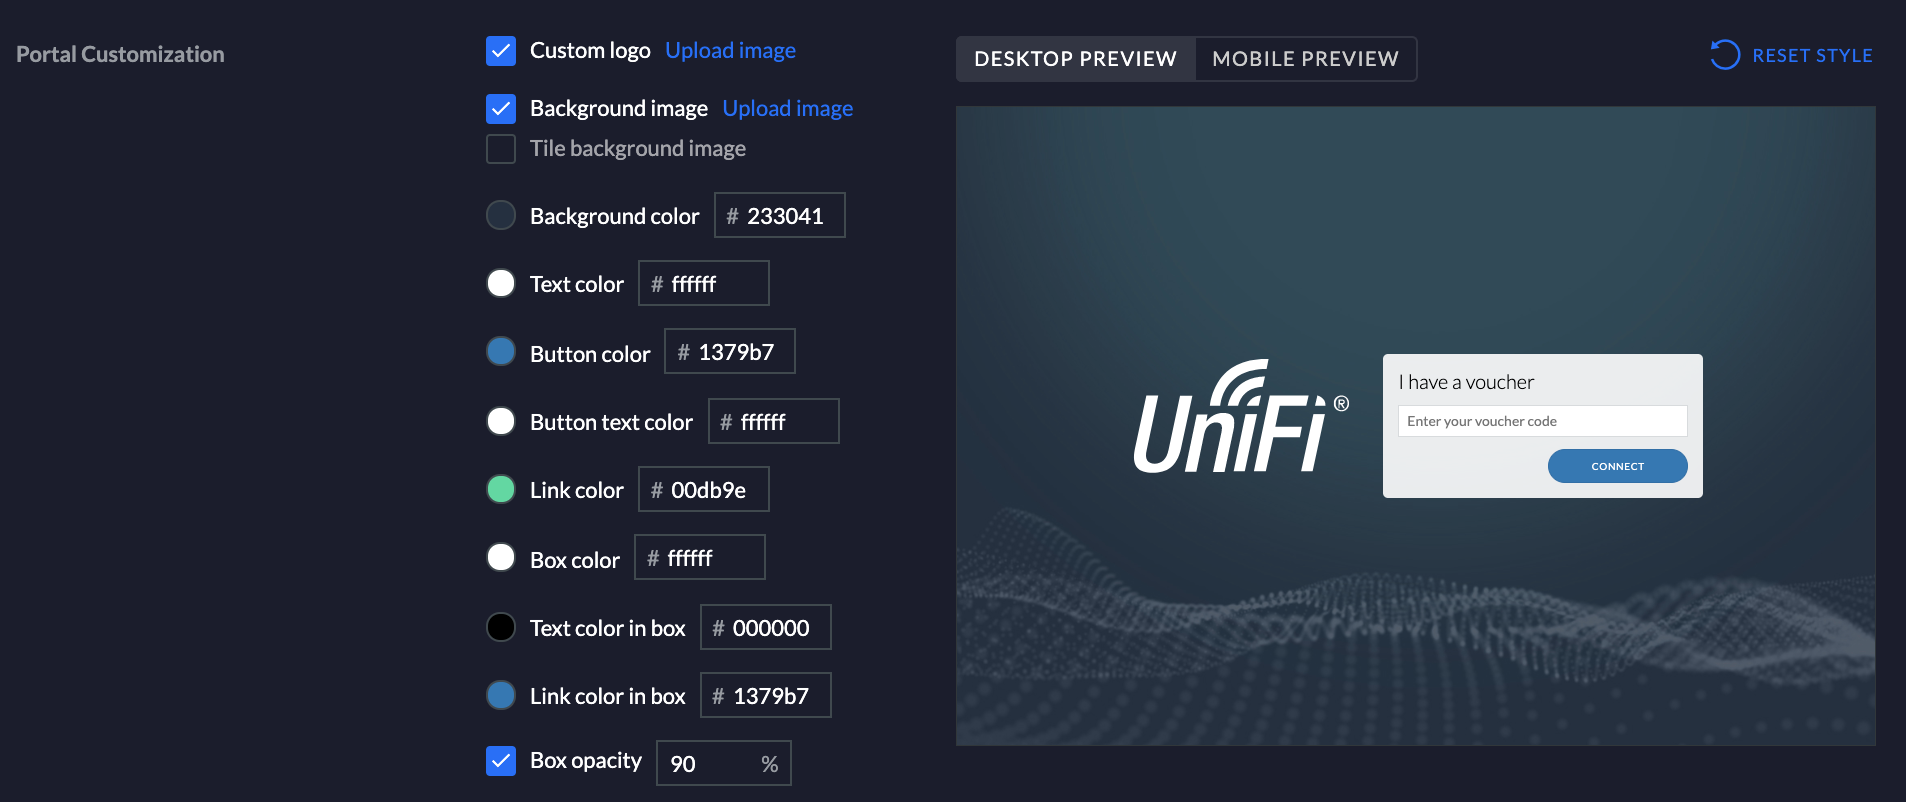 UniFi Controller - WiFi Hotspot Portal Customization